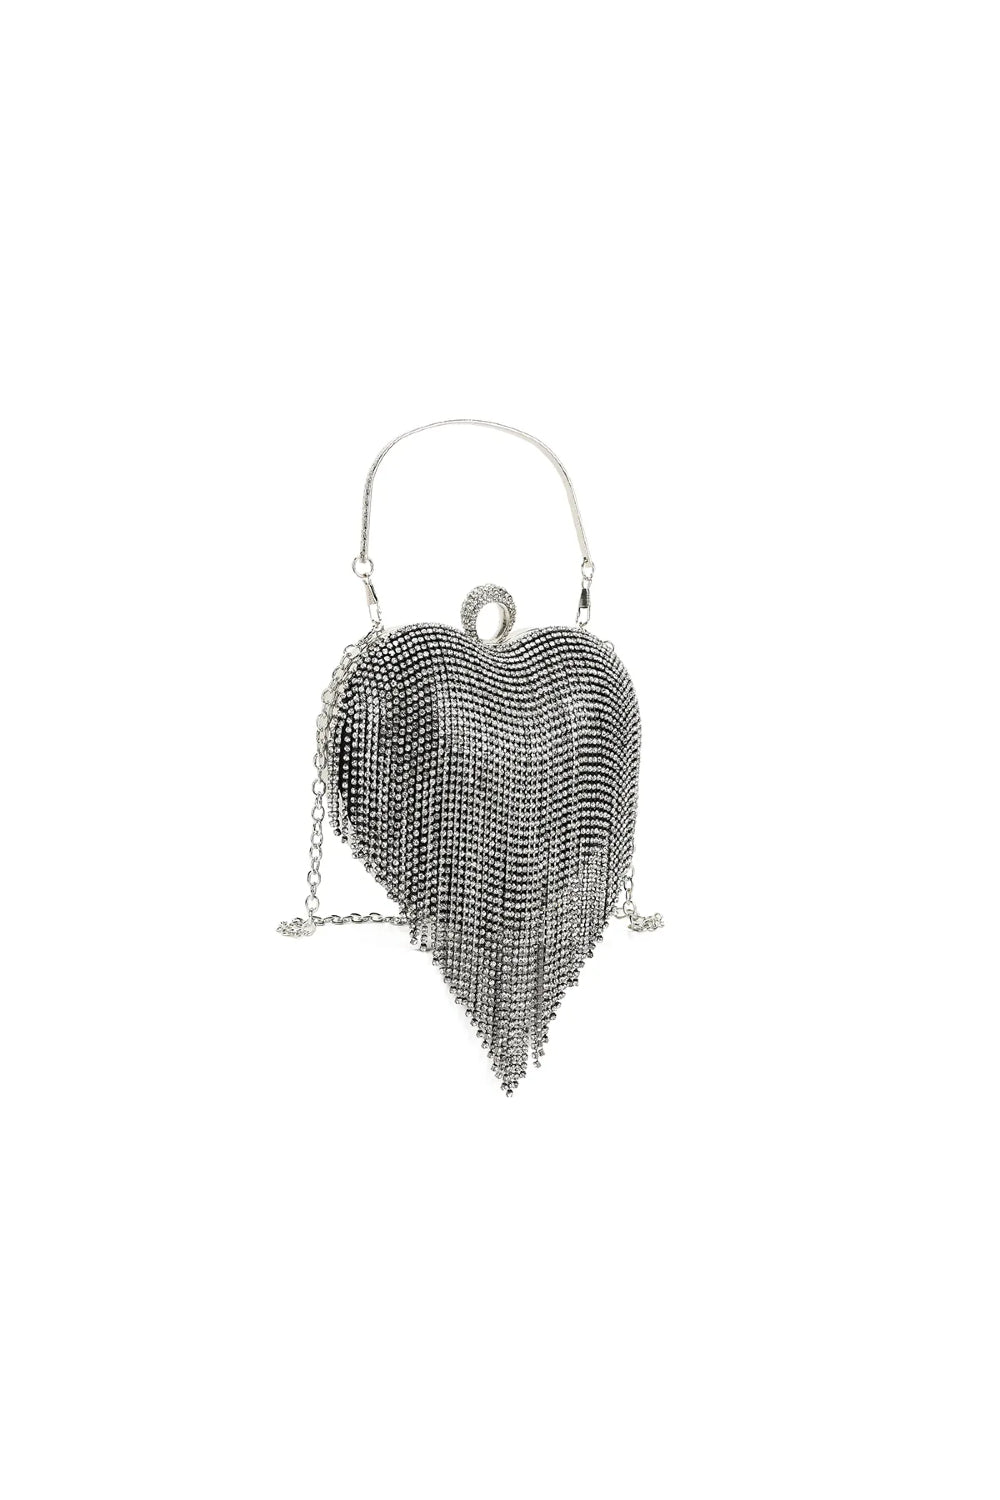 Black Heart Diamante Evening Bag ALCS2904